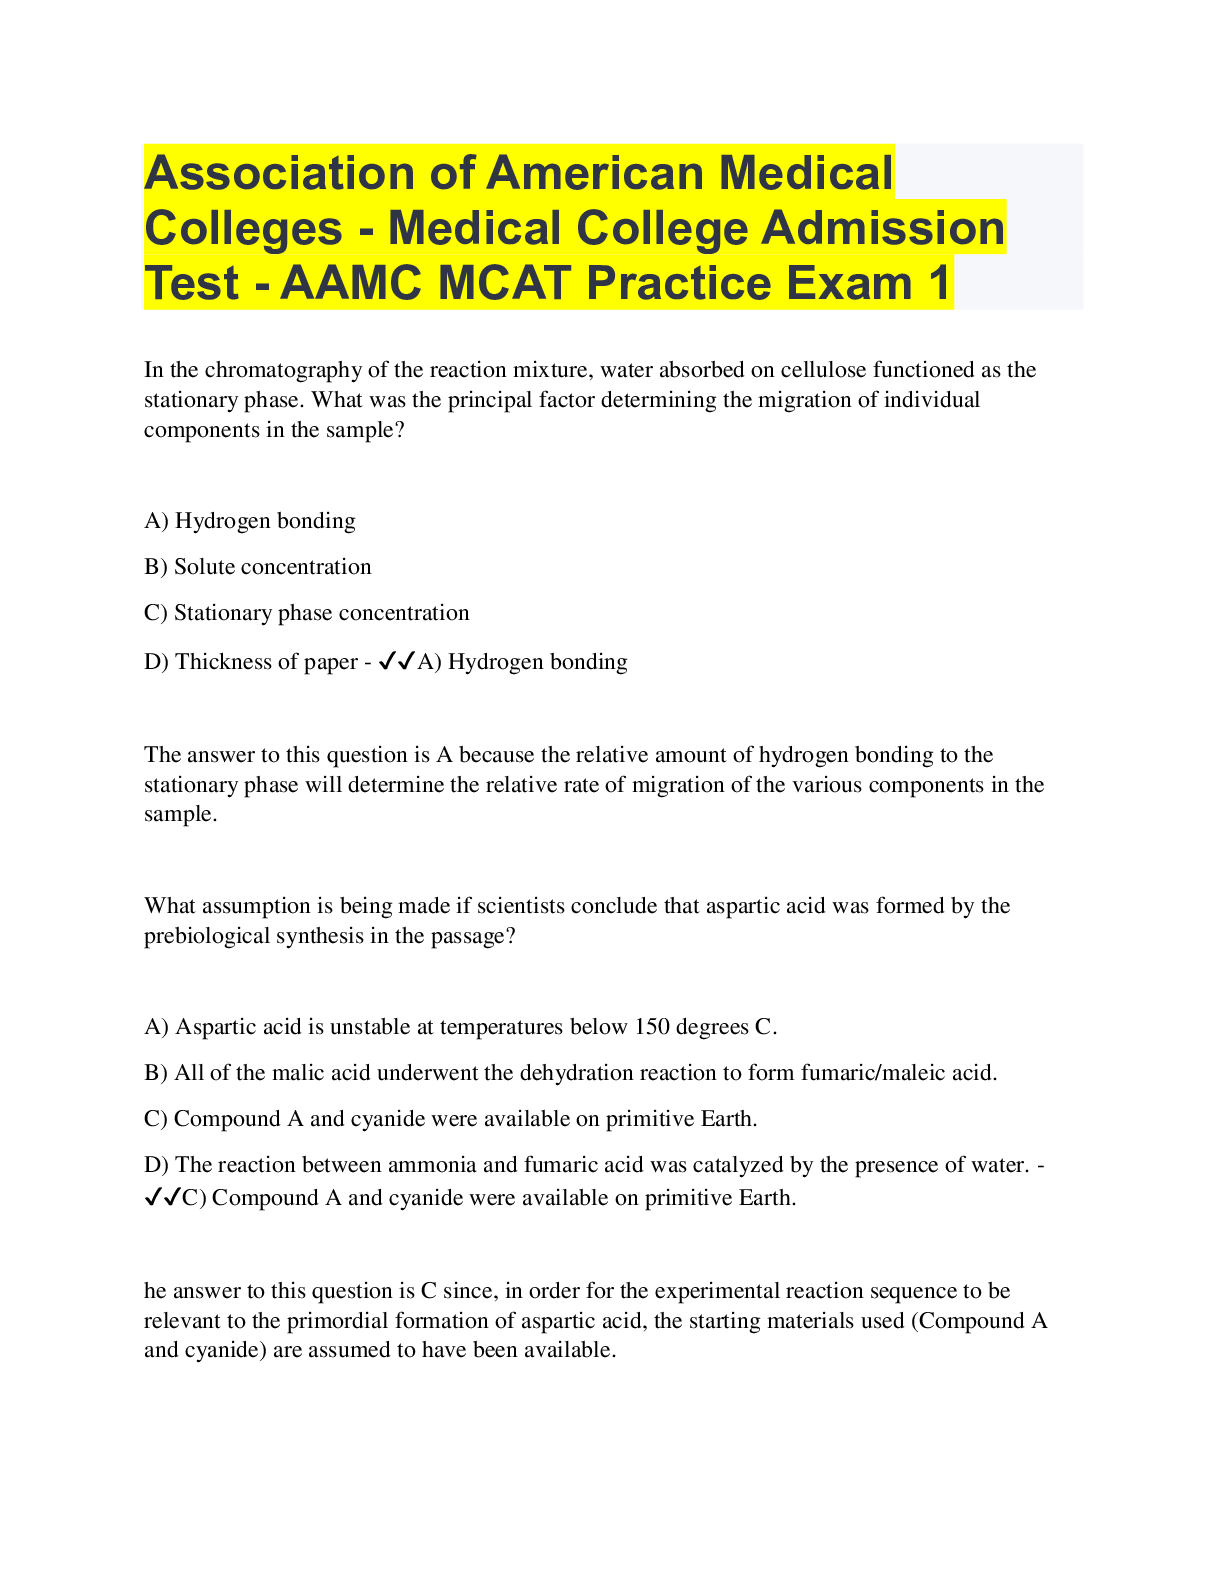 association-of-american-medical-colleges-medical-college-admission-test-aamc-mcat-practice